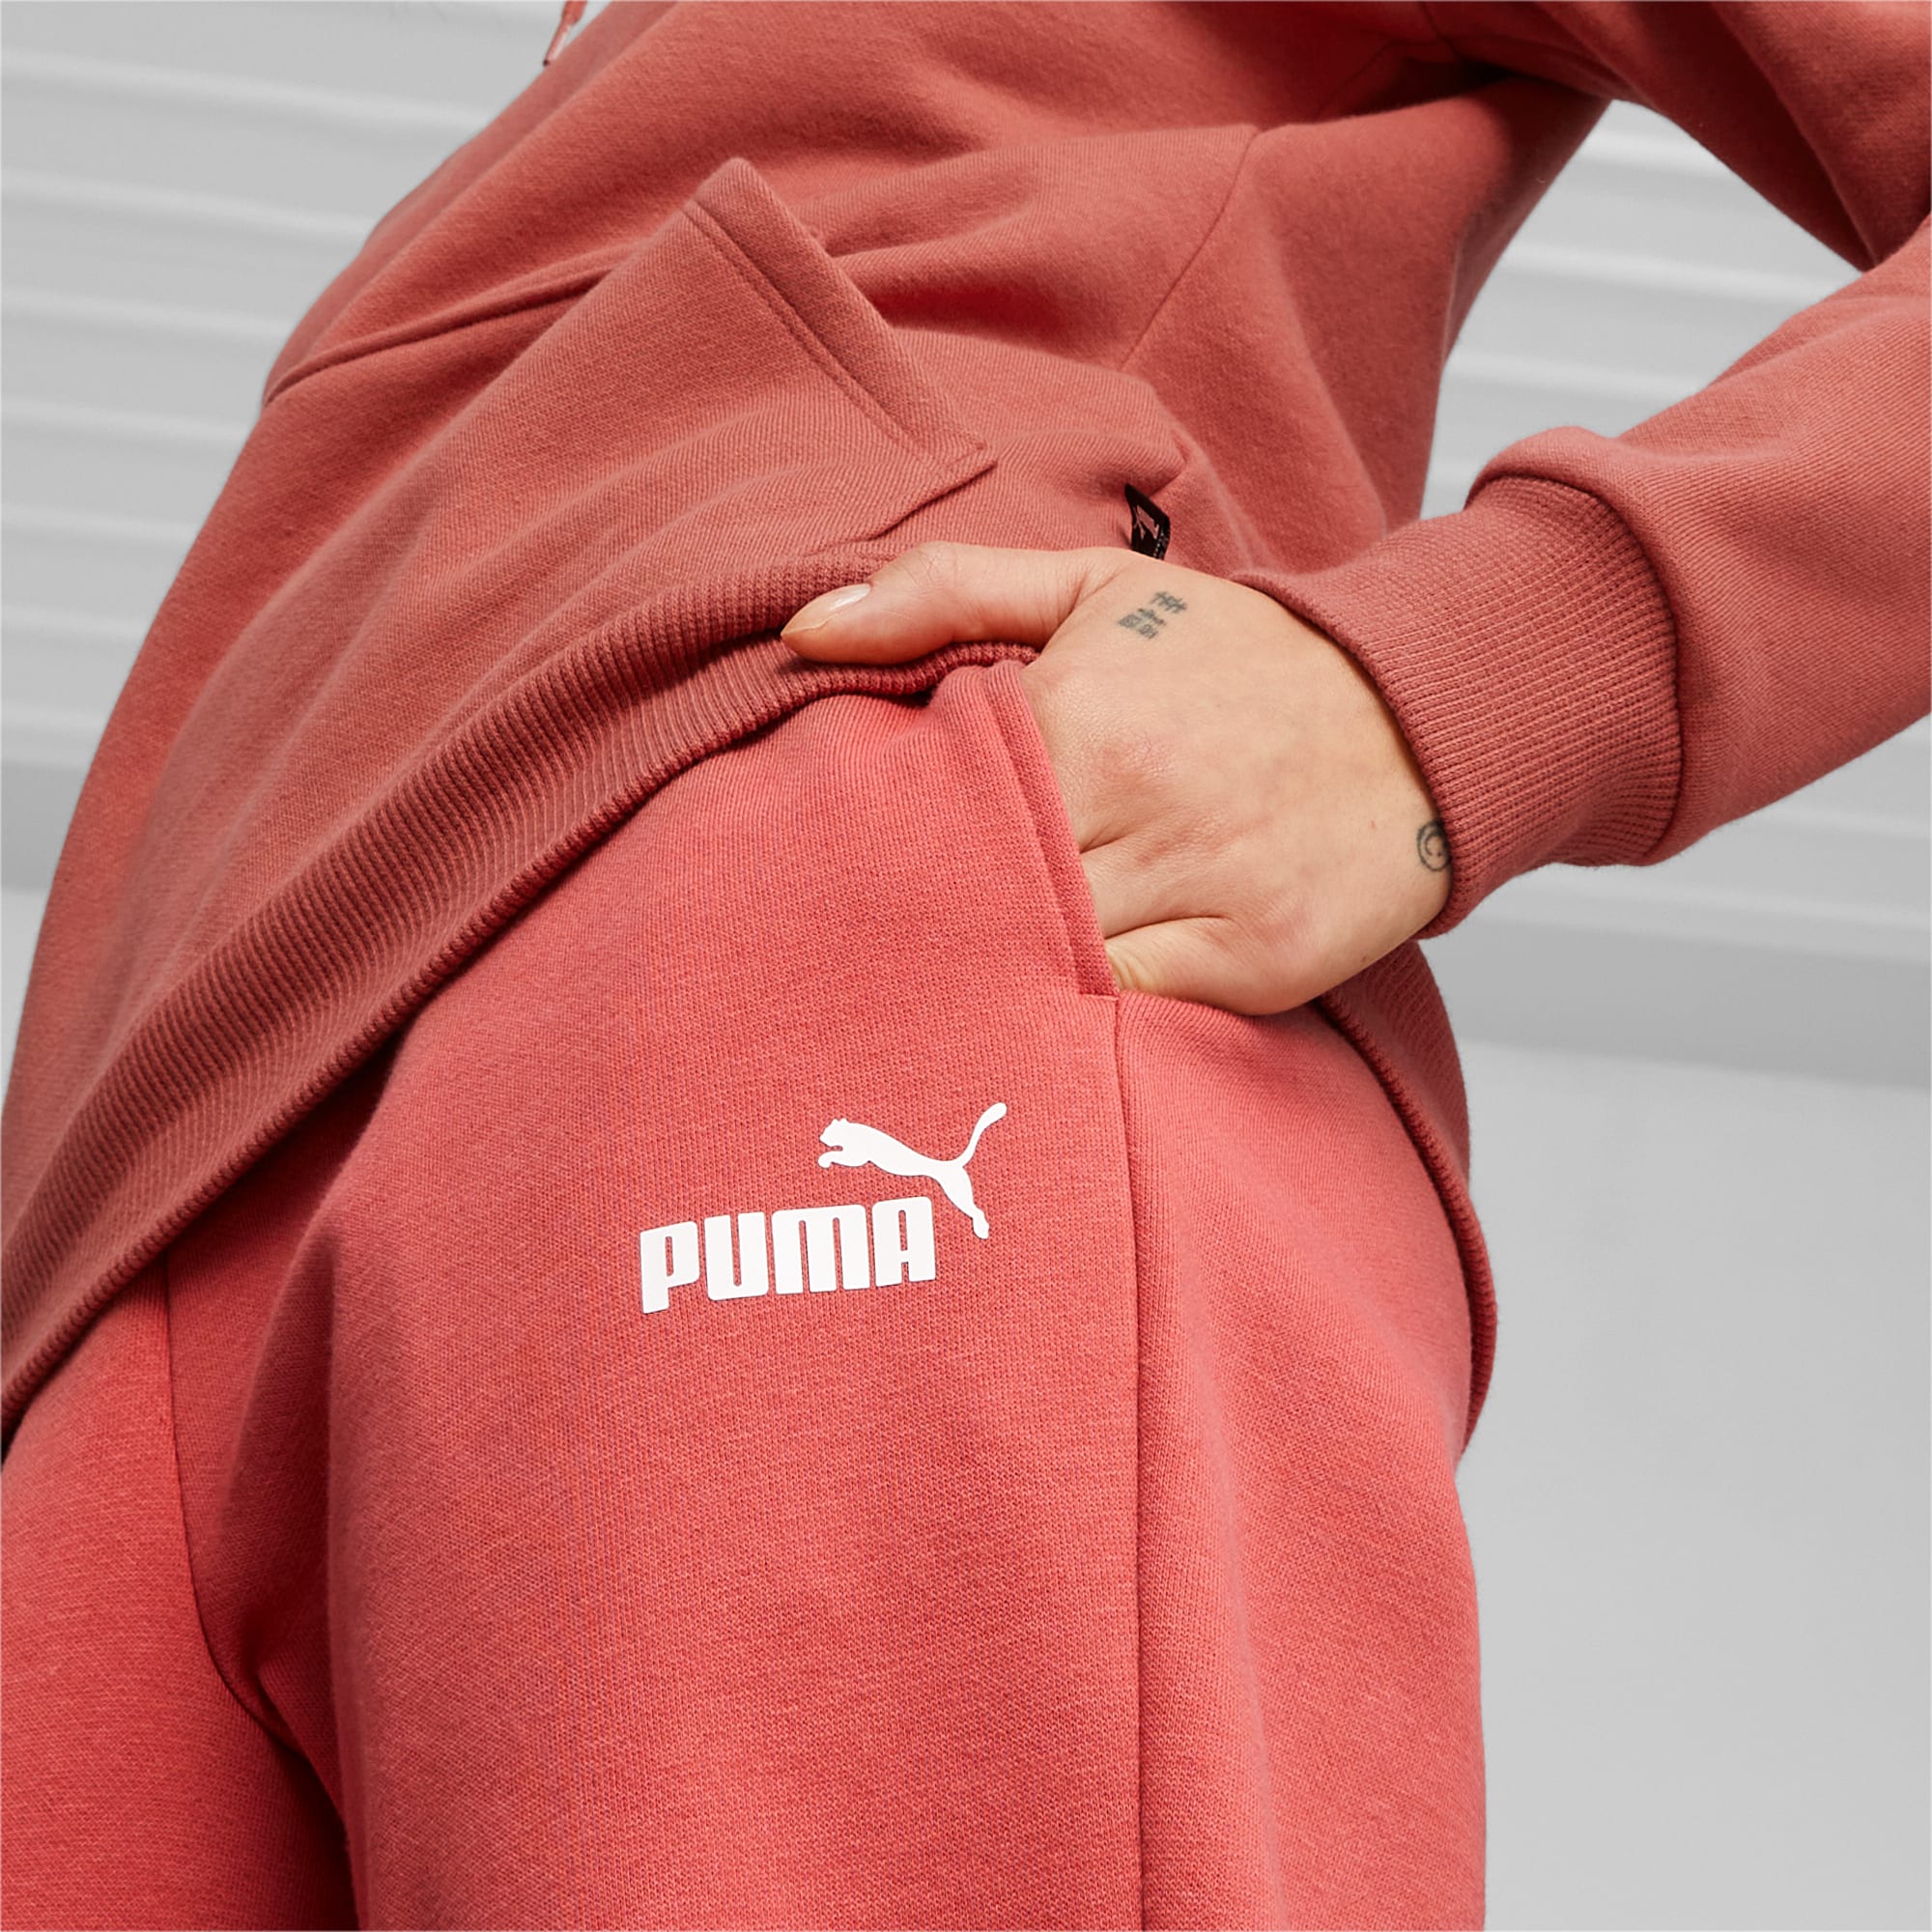 PUMA Essentials Damen-Jogginghose, Rot, Größe: S